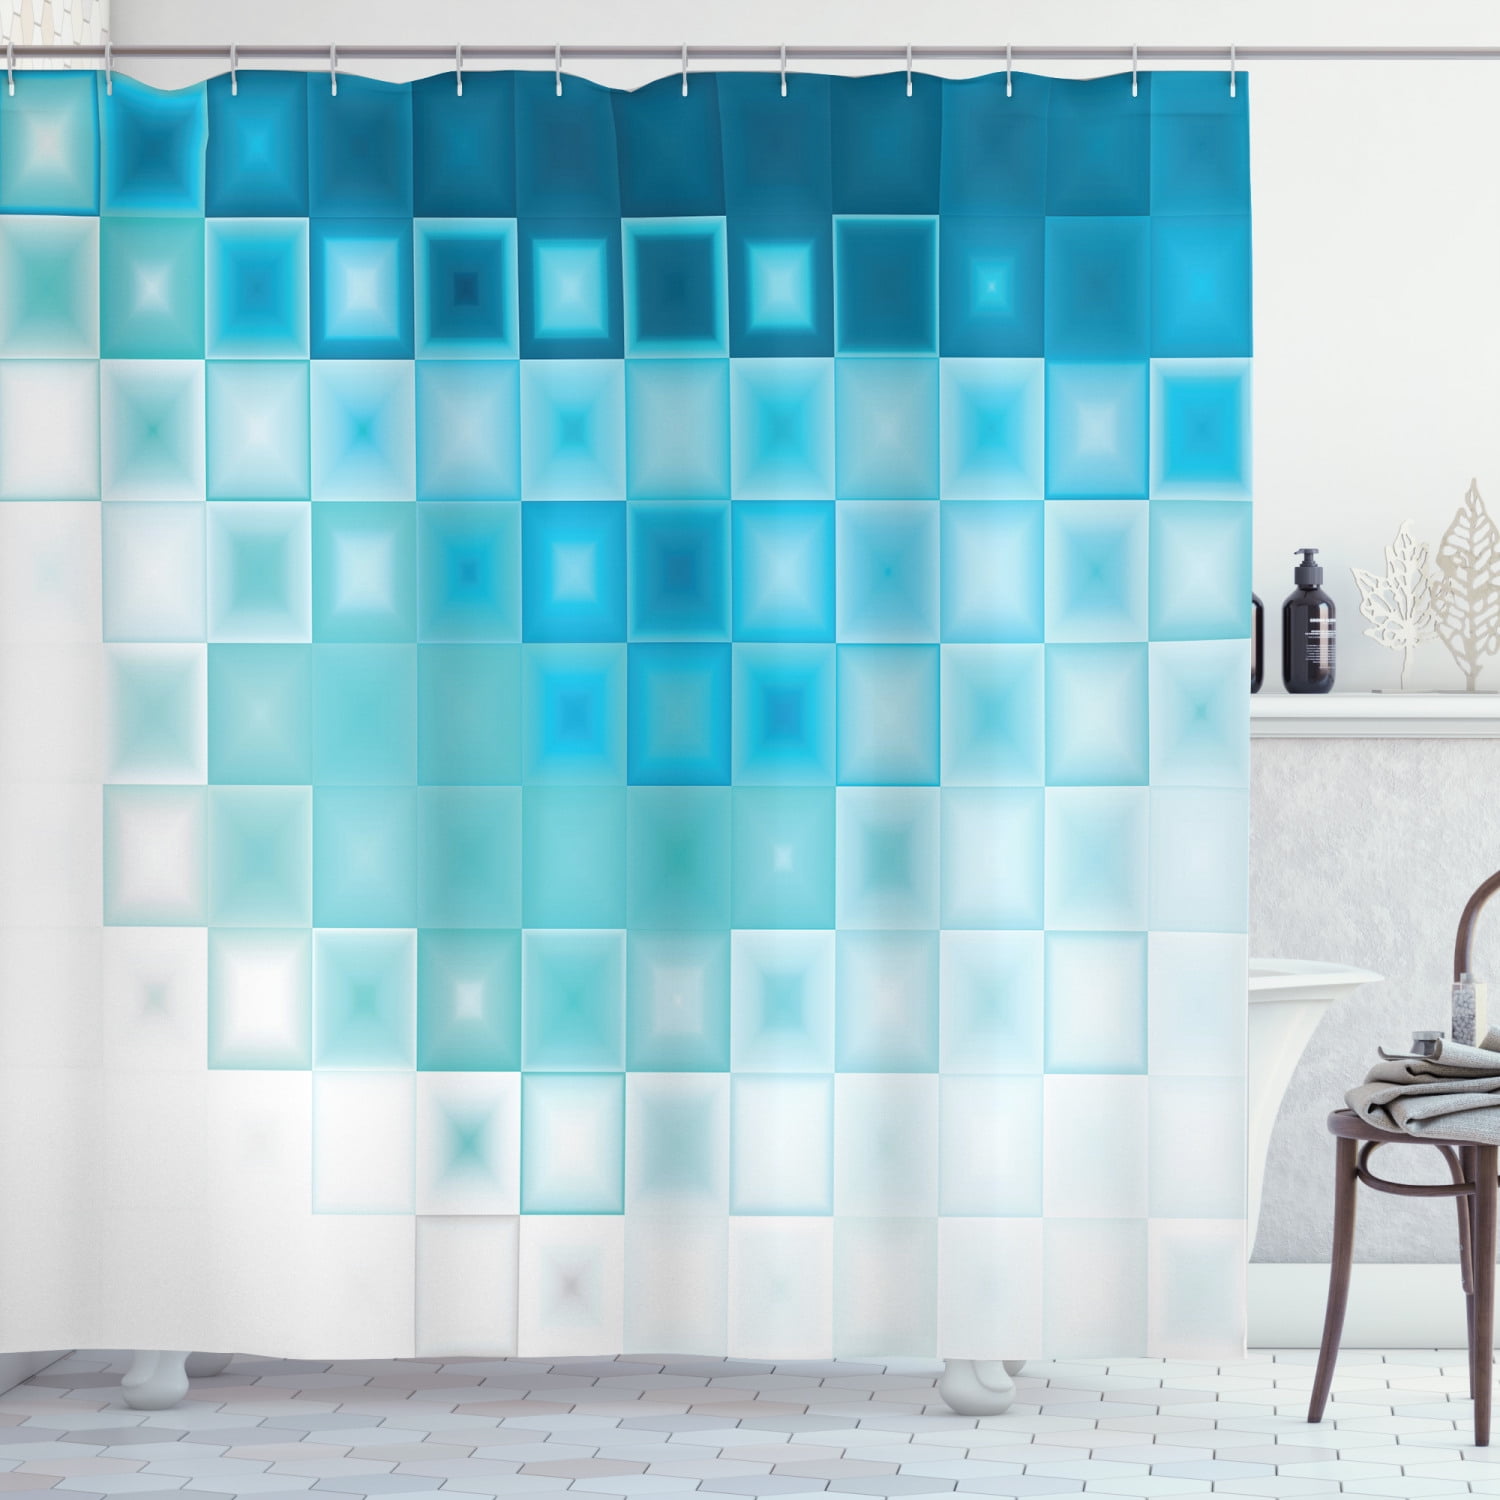 Fractal Shower Curtain Fabric Bathroom Decor Set with Hooks 4 Sizes 